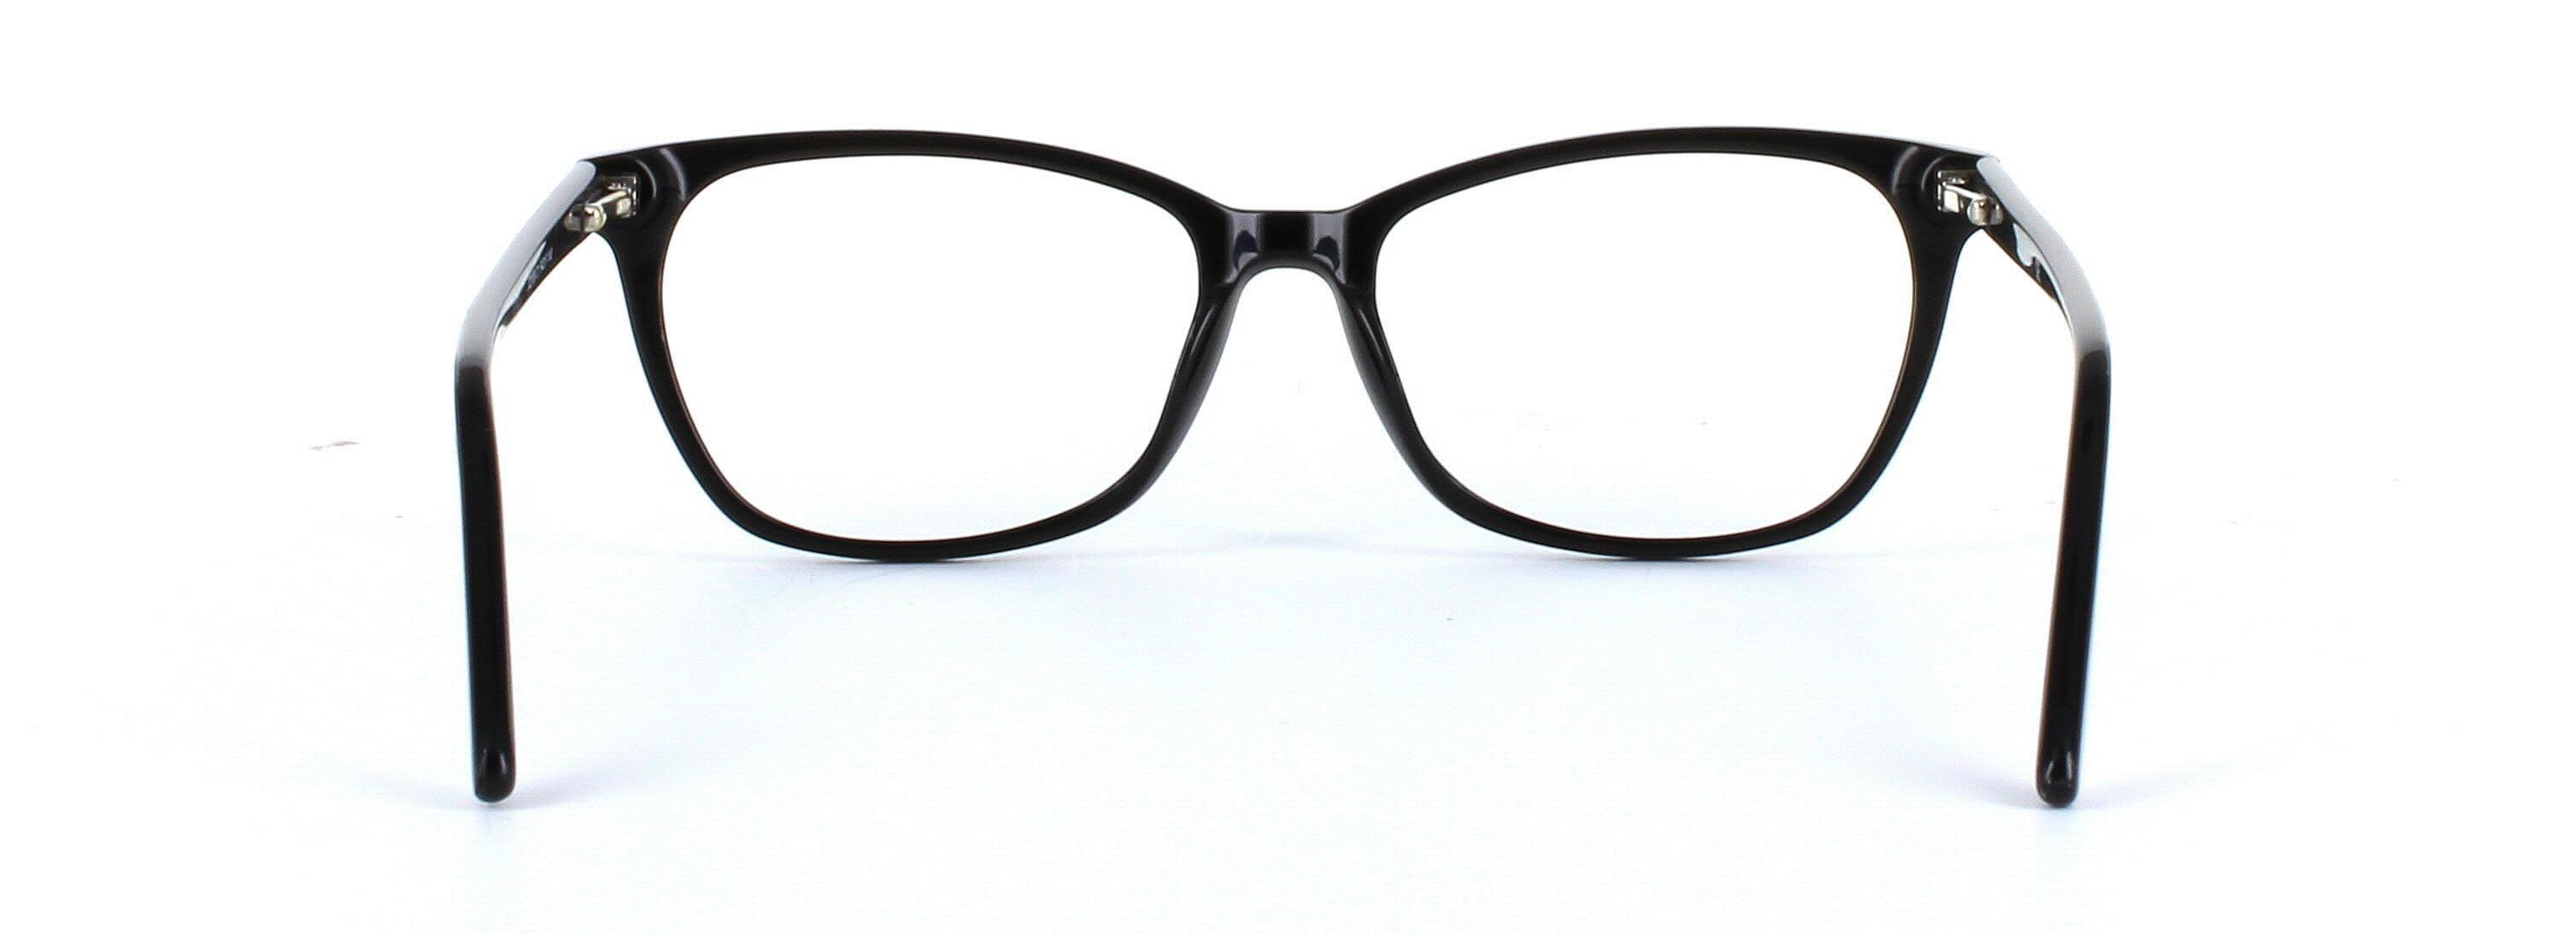 Jade Black Full Rim Oval Acetate Glasses - Image View 3